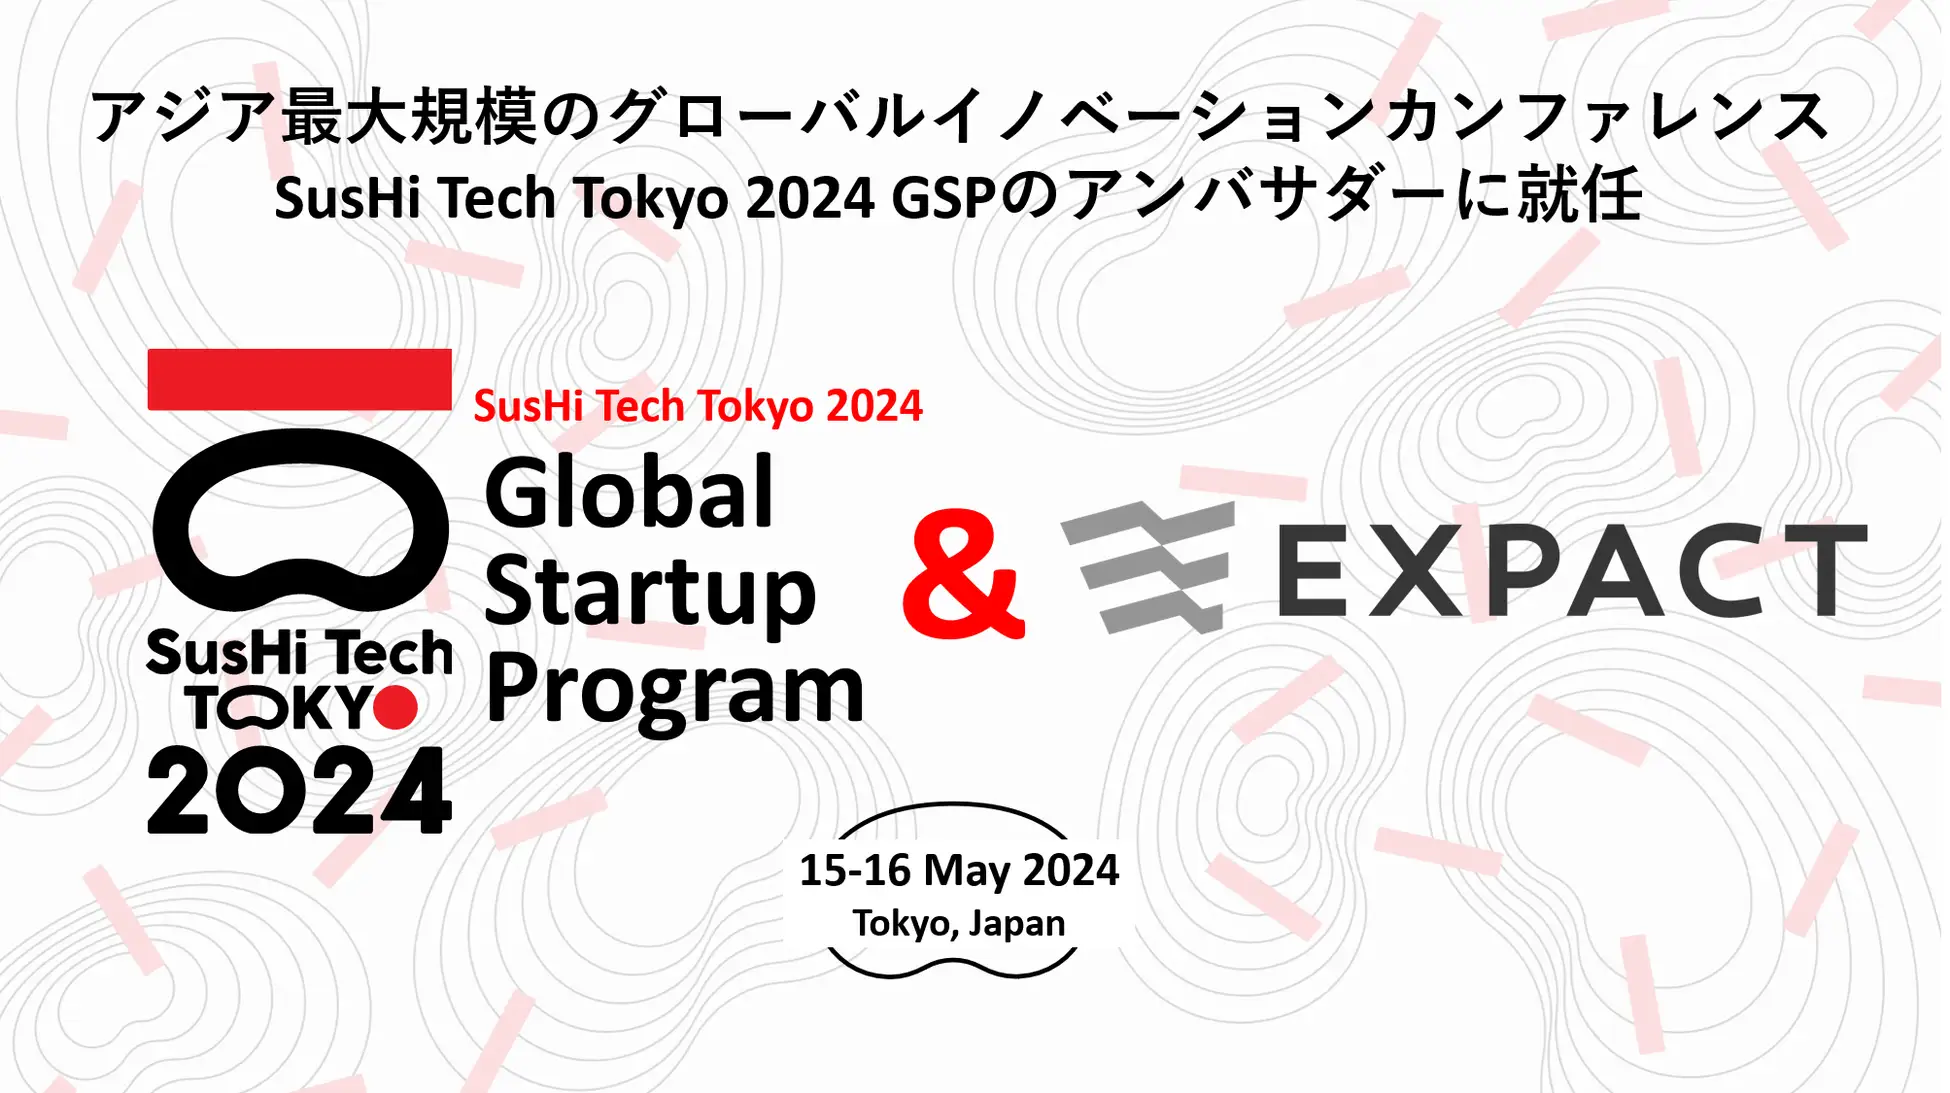 SusHi Tech Tokyo 2024 Global Startup Programアンバサダー就任のお知らせ